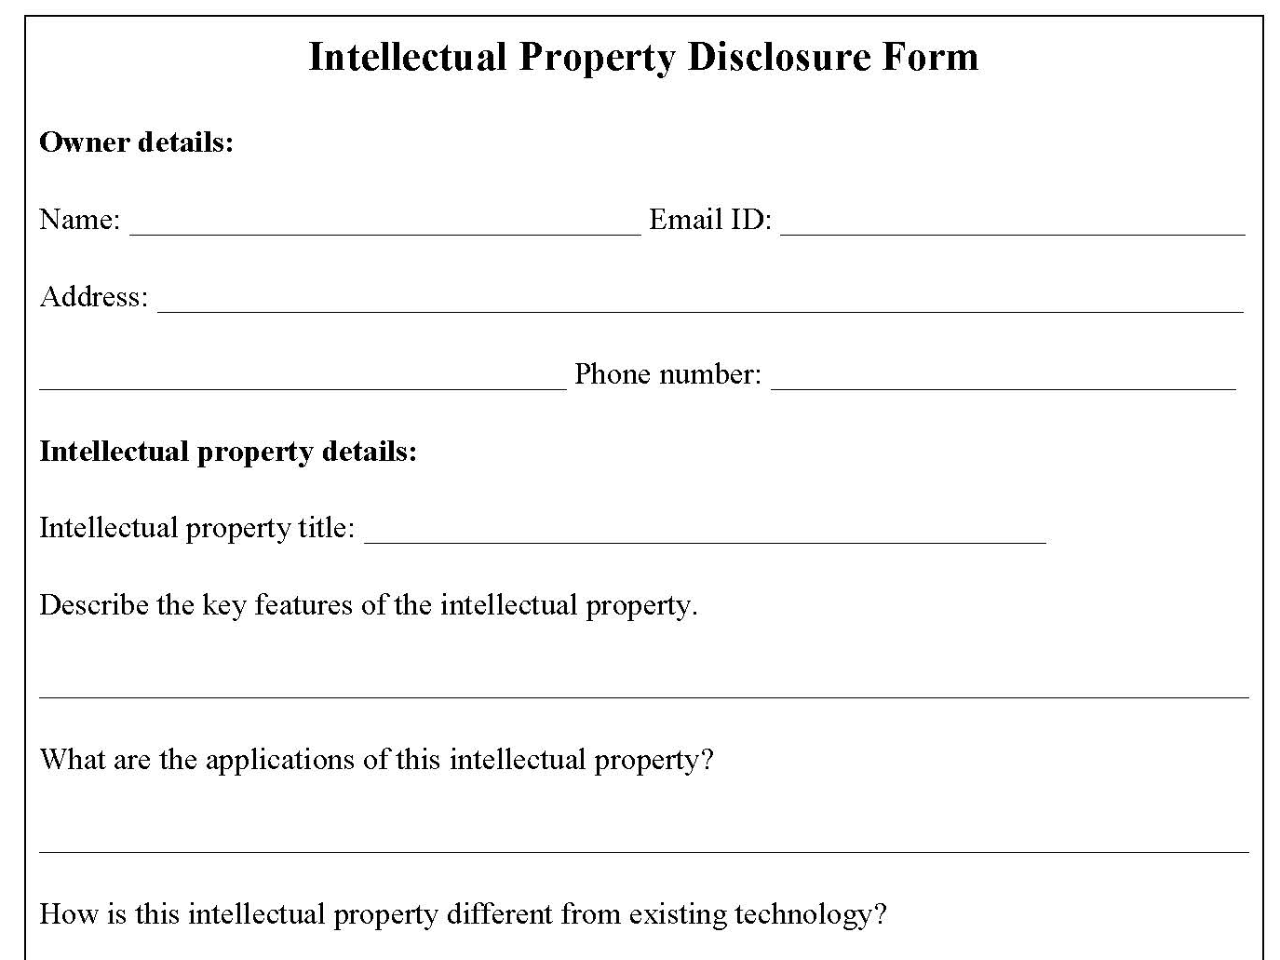 Intellectual Property Disclosure Form